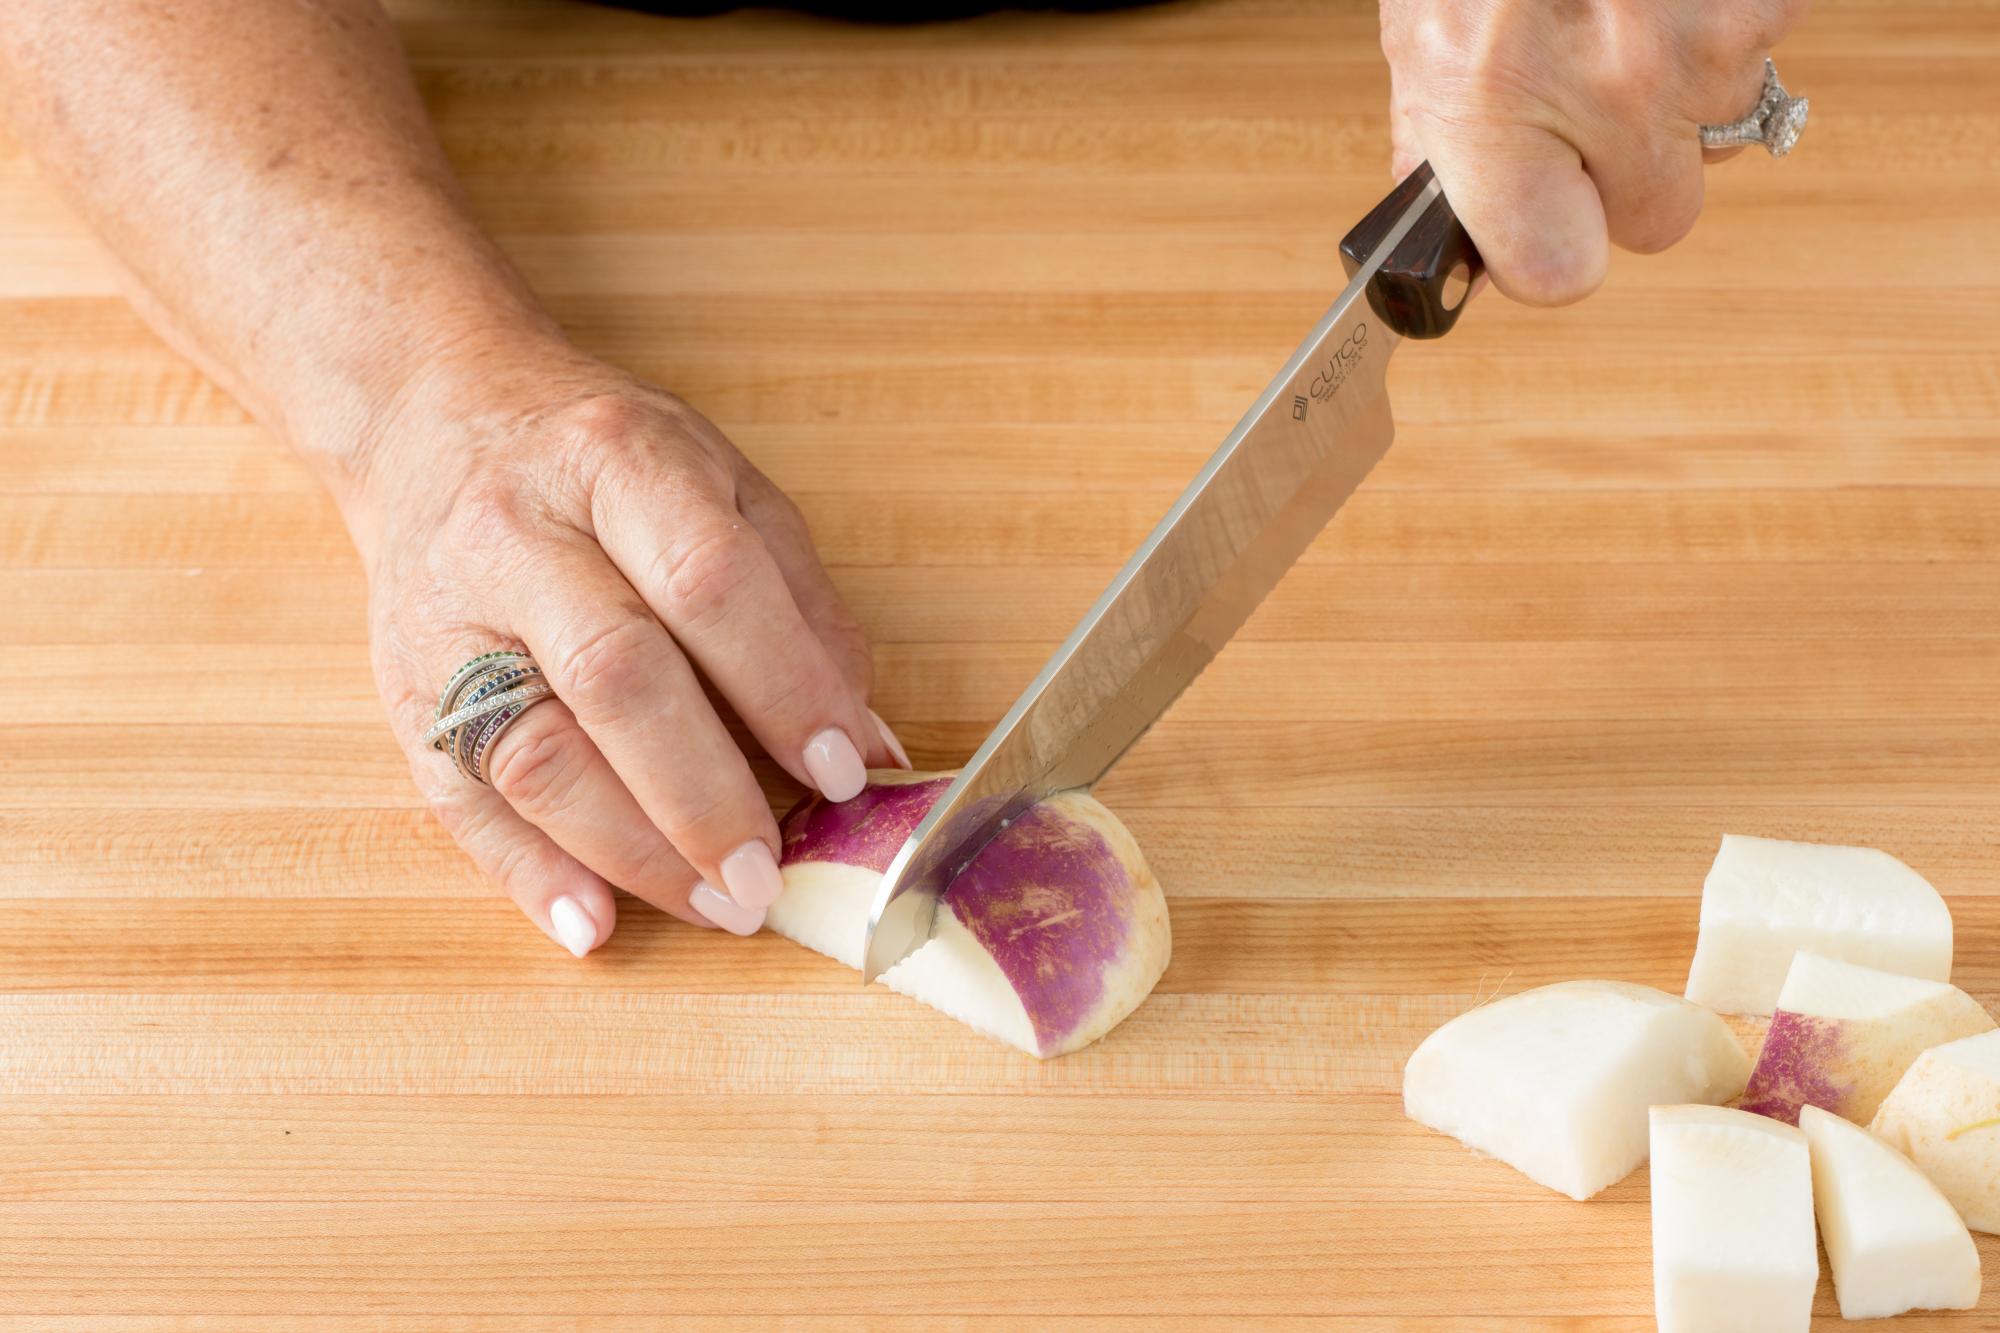 How to Cut a Turnip